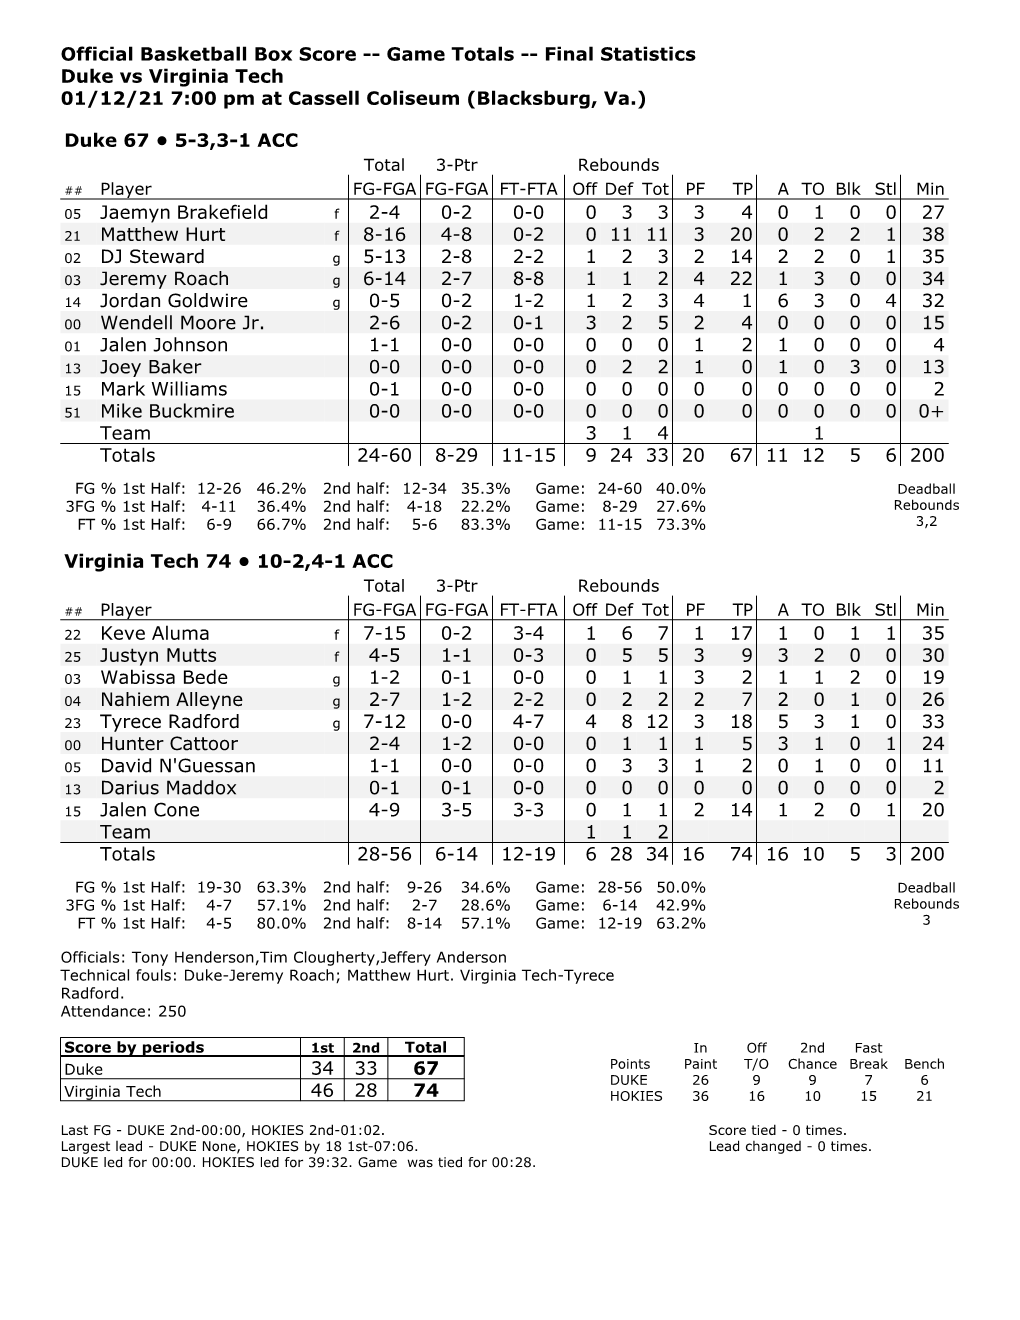 Official Basketball Box Score -- Game Totals -- Final Statistics Duke Vs Virginia Tech 01/12/21 7:00 Pm at Cassell Coliseum (Blacksburg, Va.)